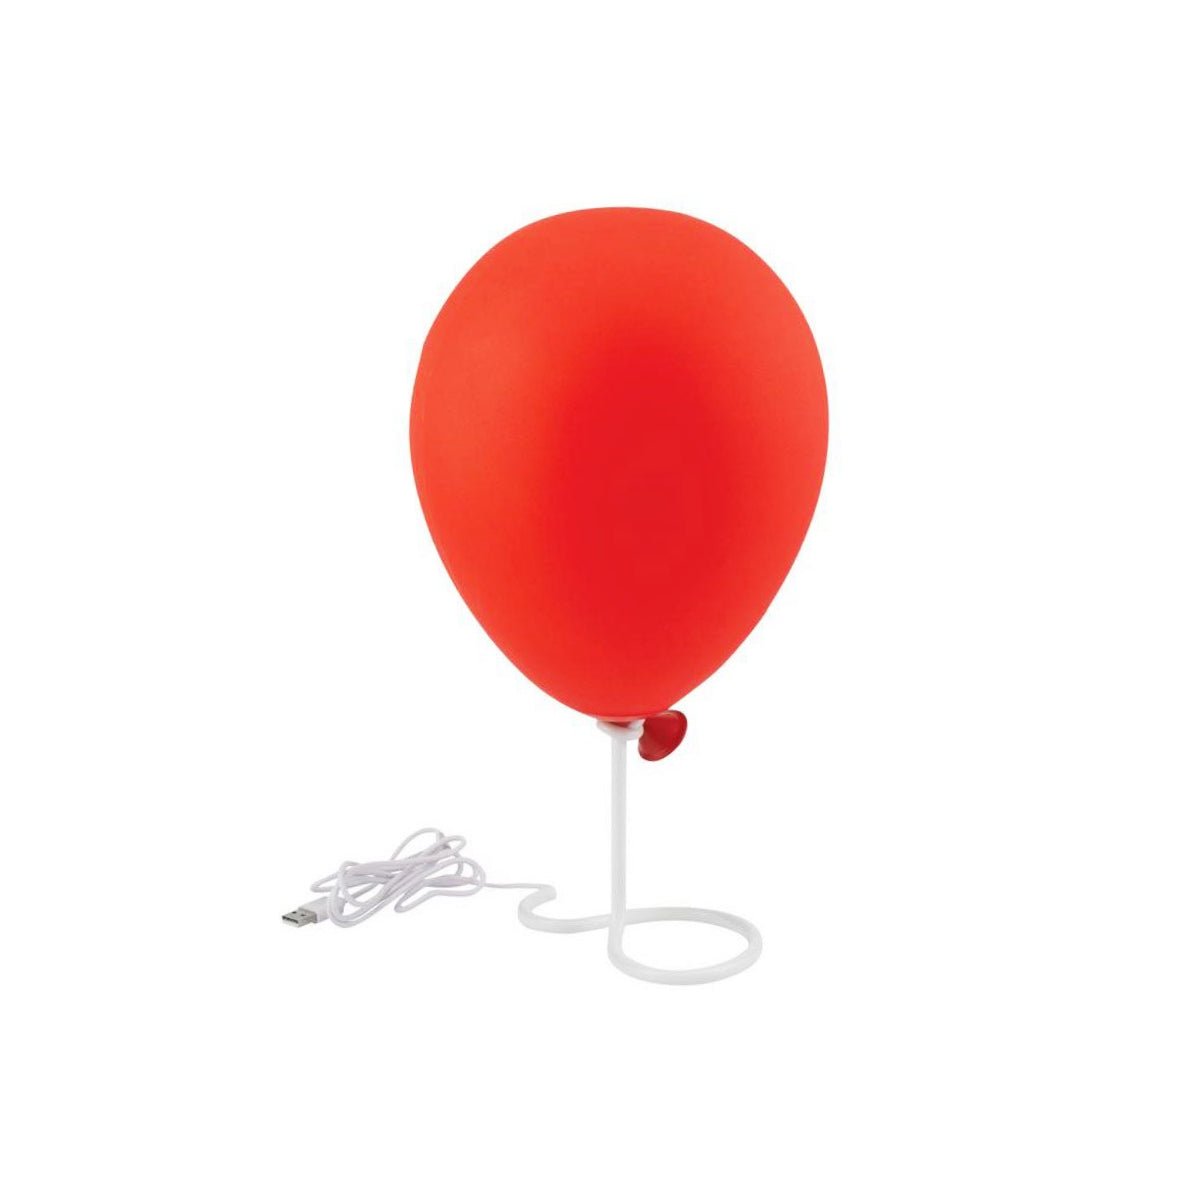 Paladone Pennywise Balloon Lamp V2 - أكسسوارات - Store 974 | ستور ٩٧٤